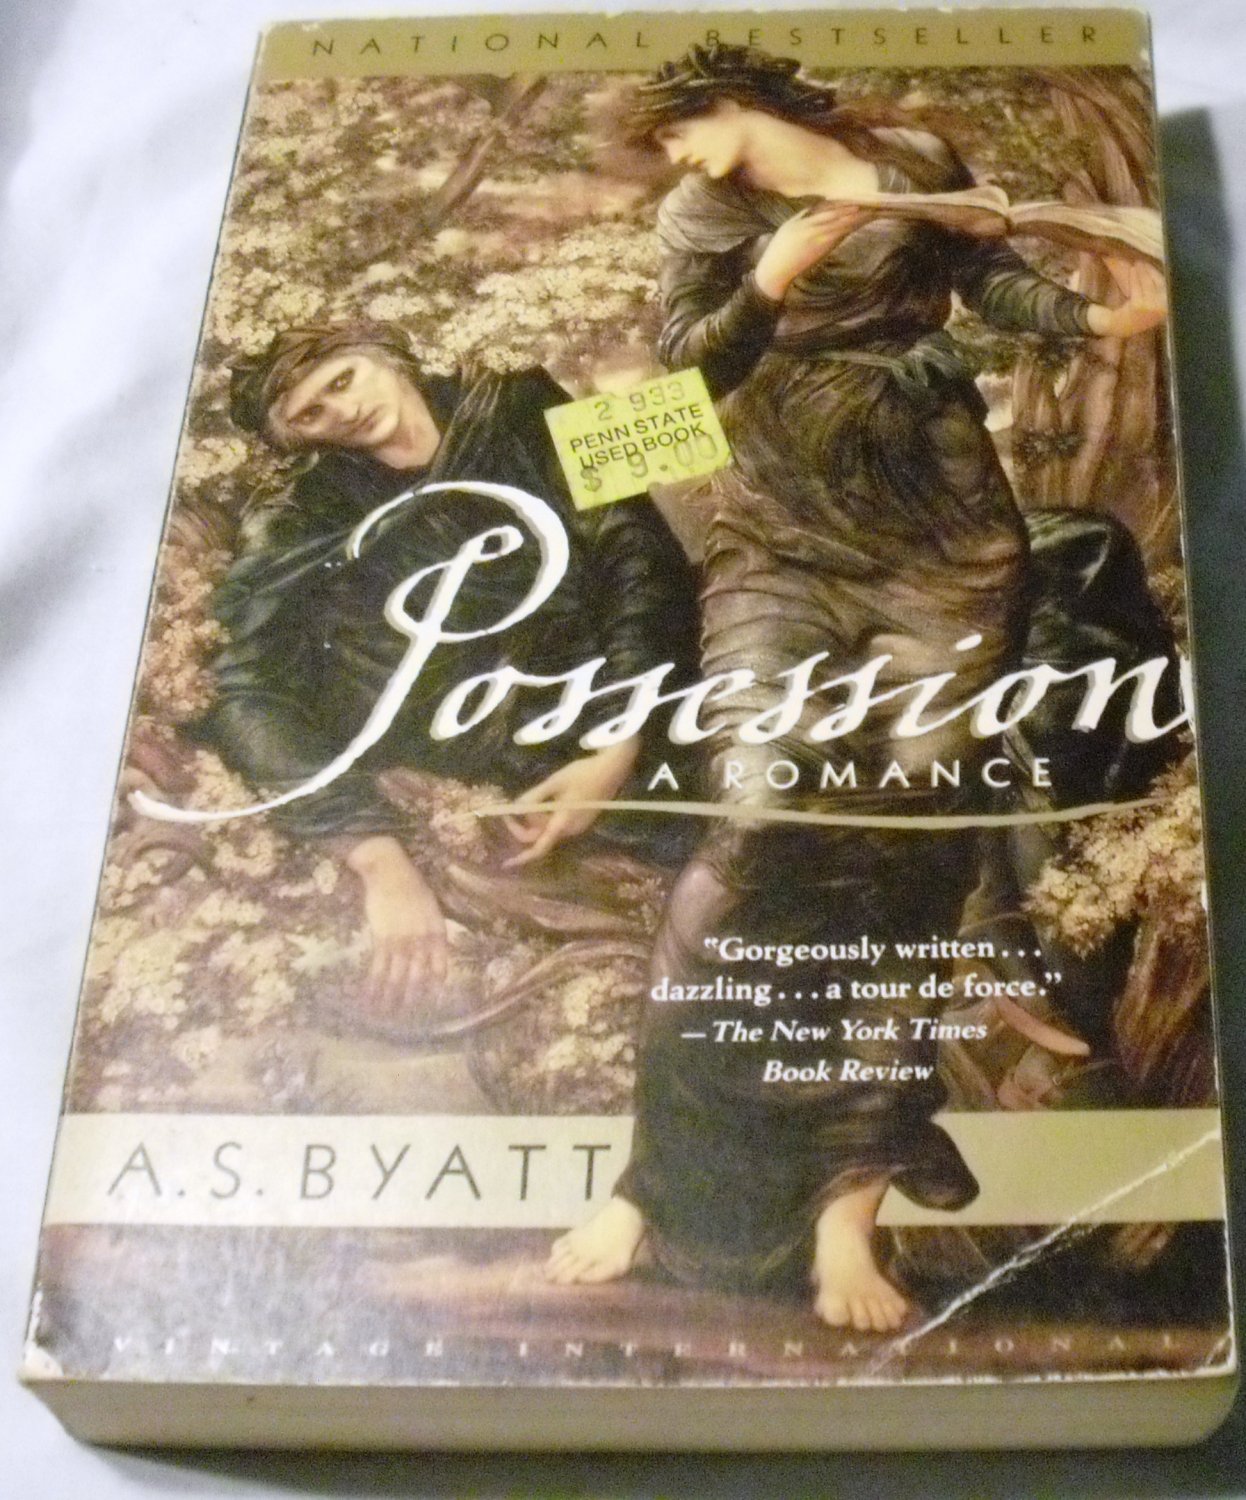 possession by as byatt